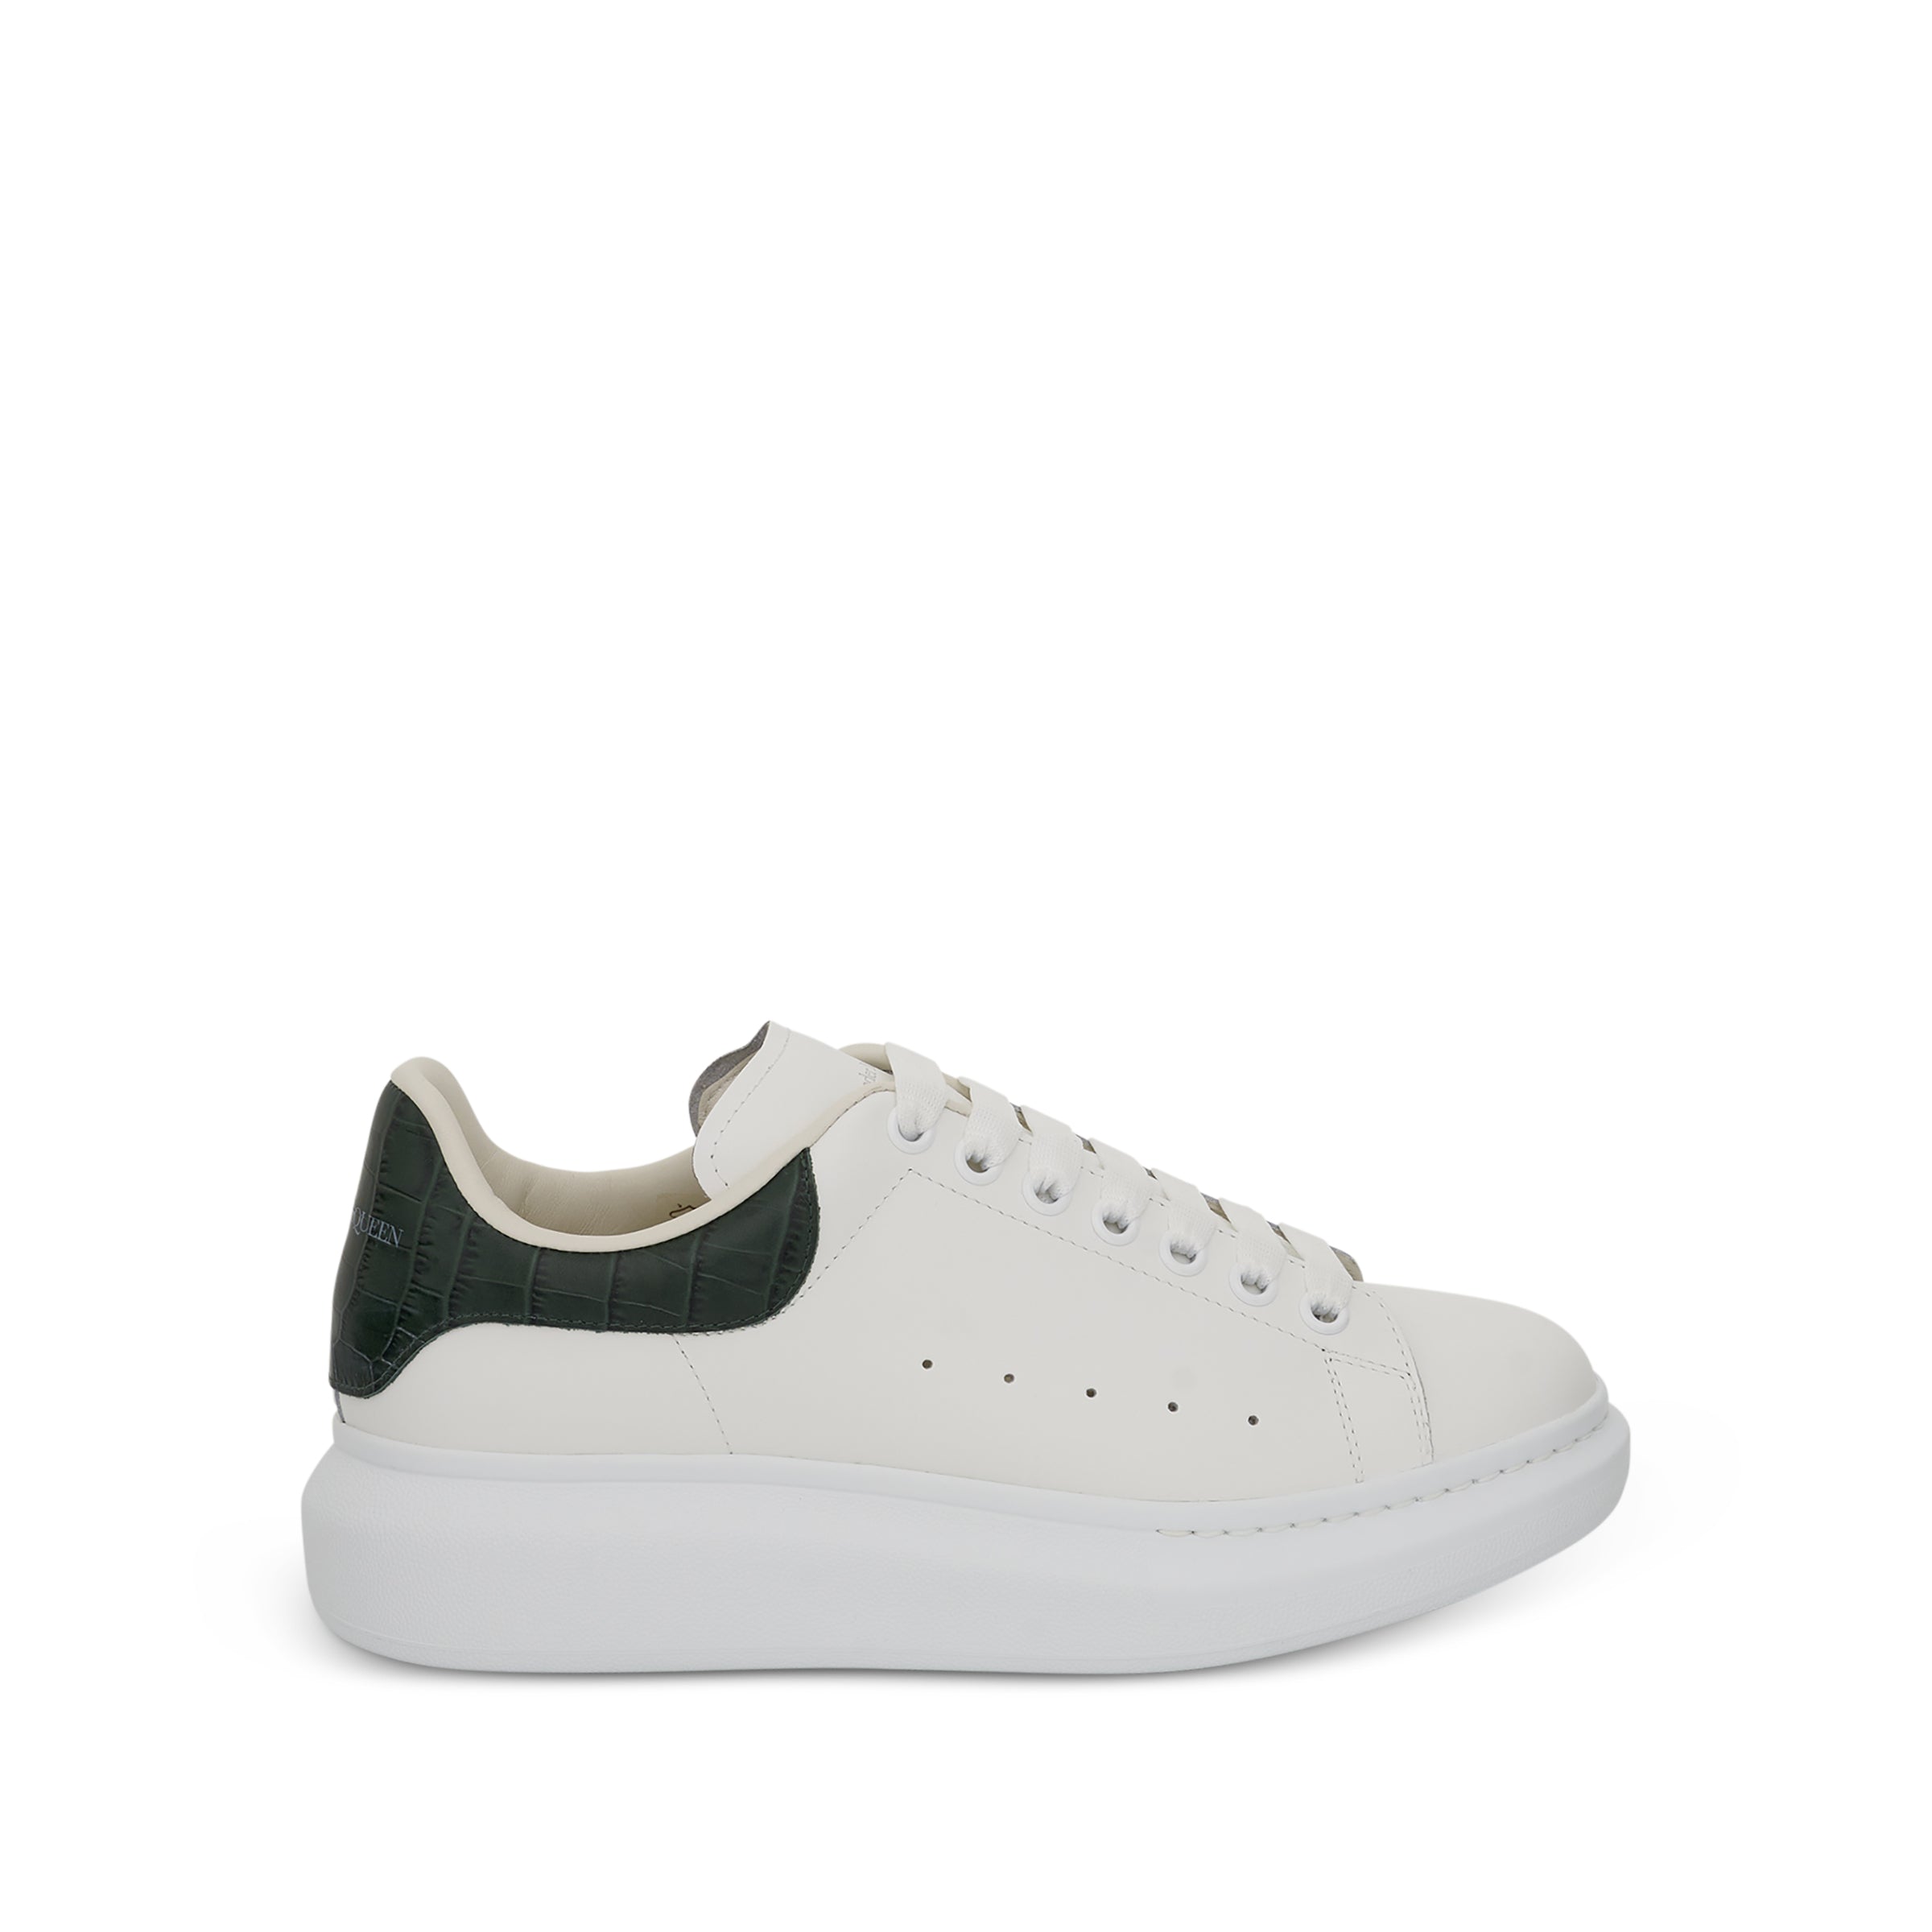 ALEXANDER McQUEEN Larry Oversized Sneaker in White/Forest Green – MARAIS